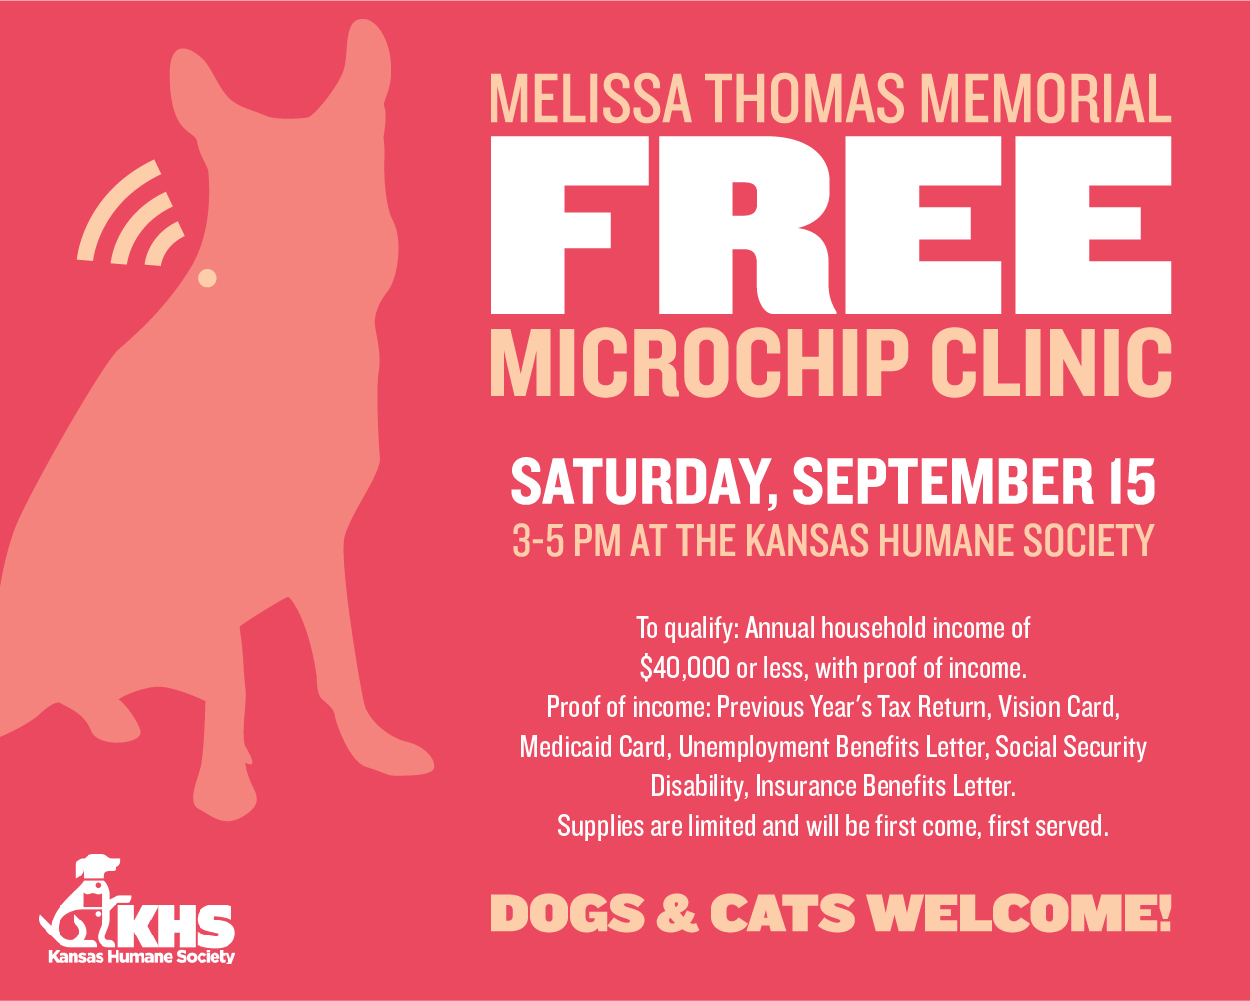 Melissa Thomas Memorial Free Microchip Clinic